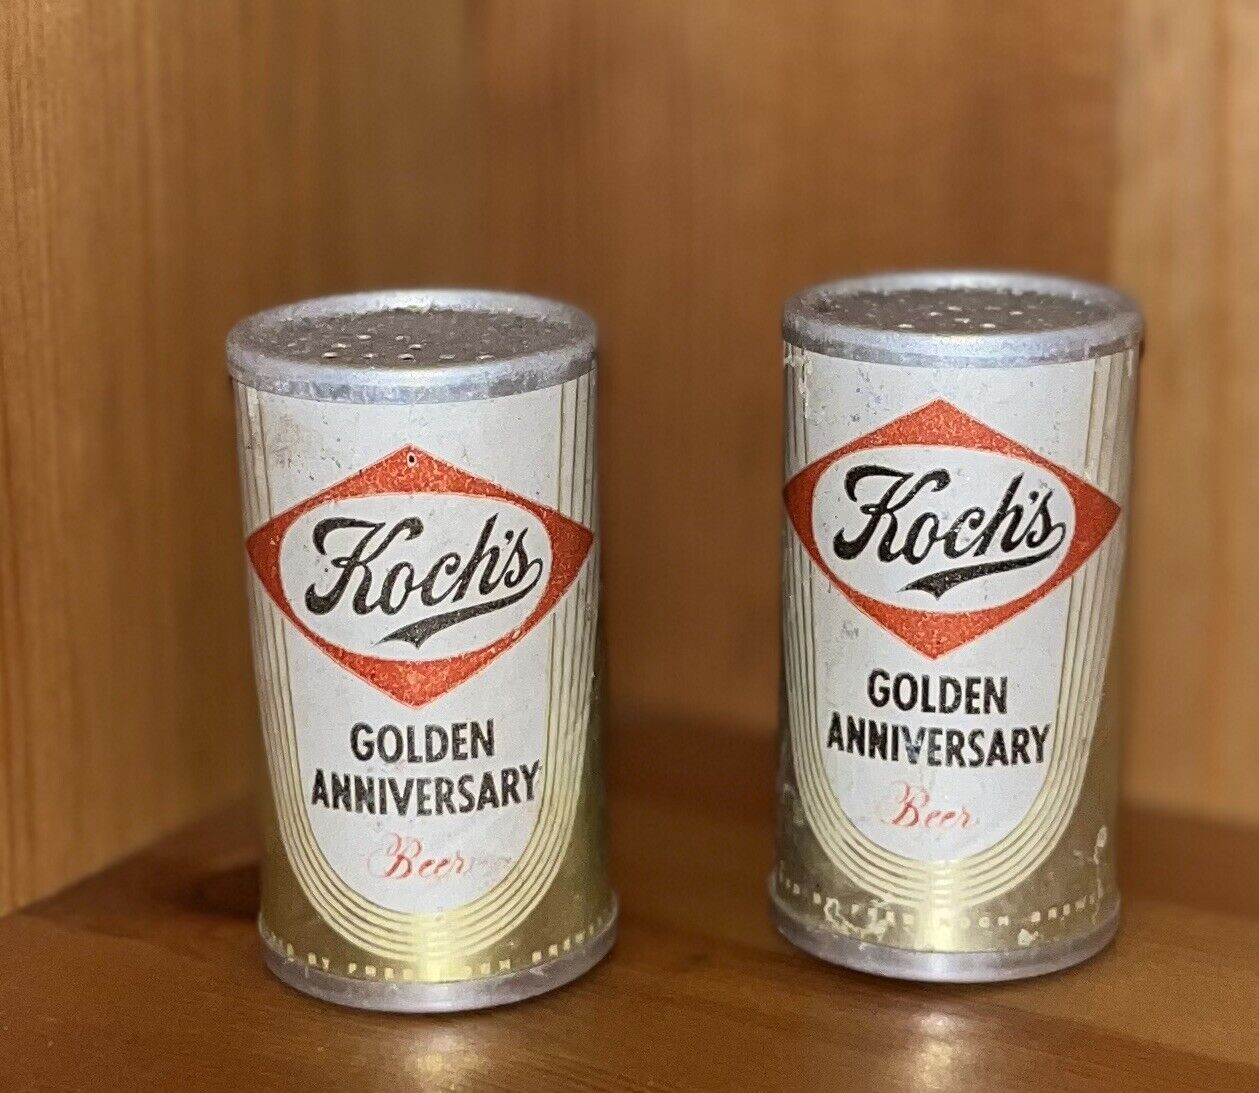 Kochs Golden Anniversary Beer Vintage Salt And Pepper Shakers Collectors Item